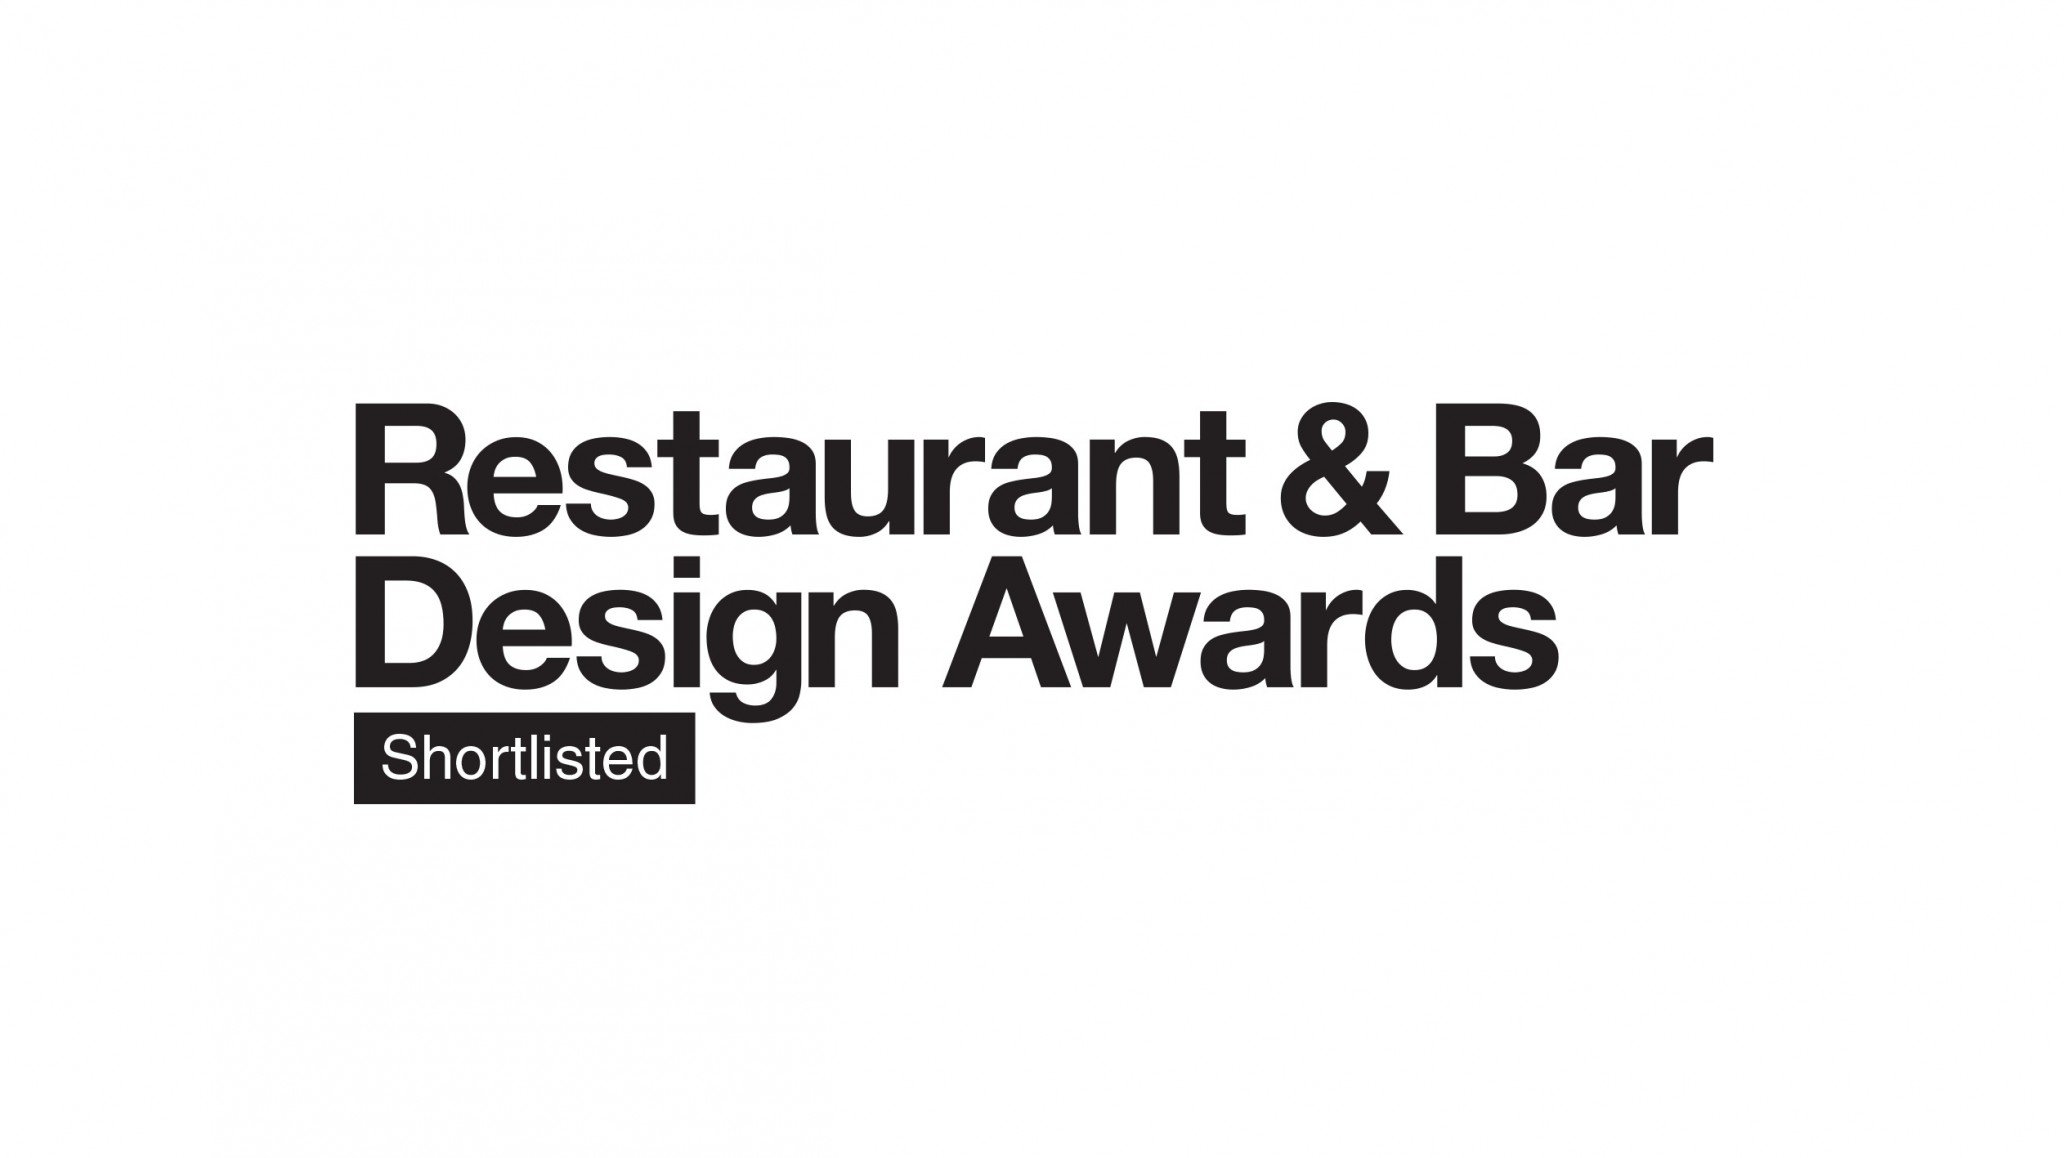 Shortlisted-Logo-Restaurant-Bar-Design-Awards-1-uai-2064x1158.jpg